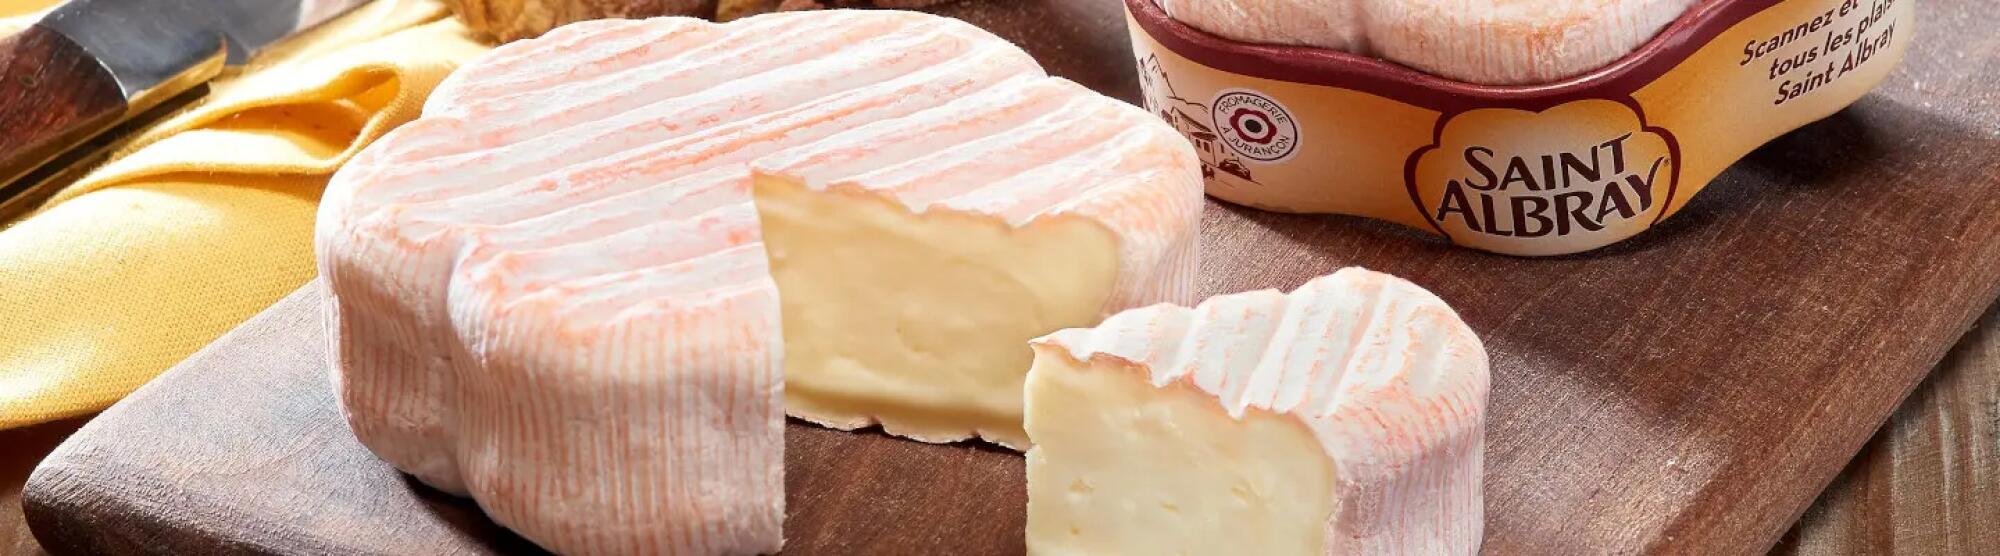 Saint Albray, fiche fromage